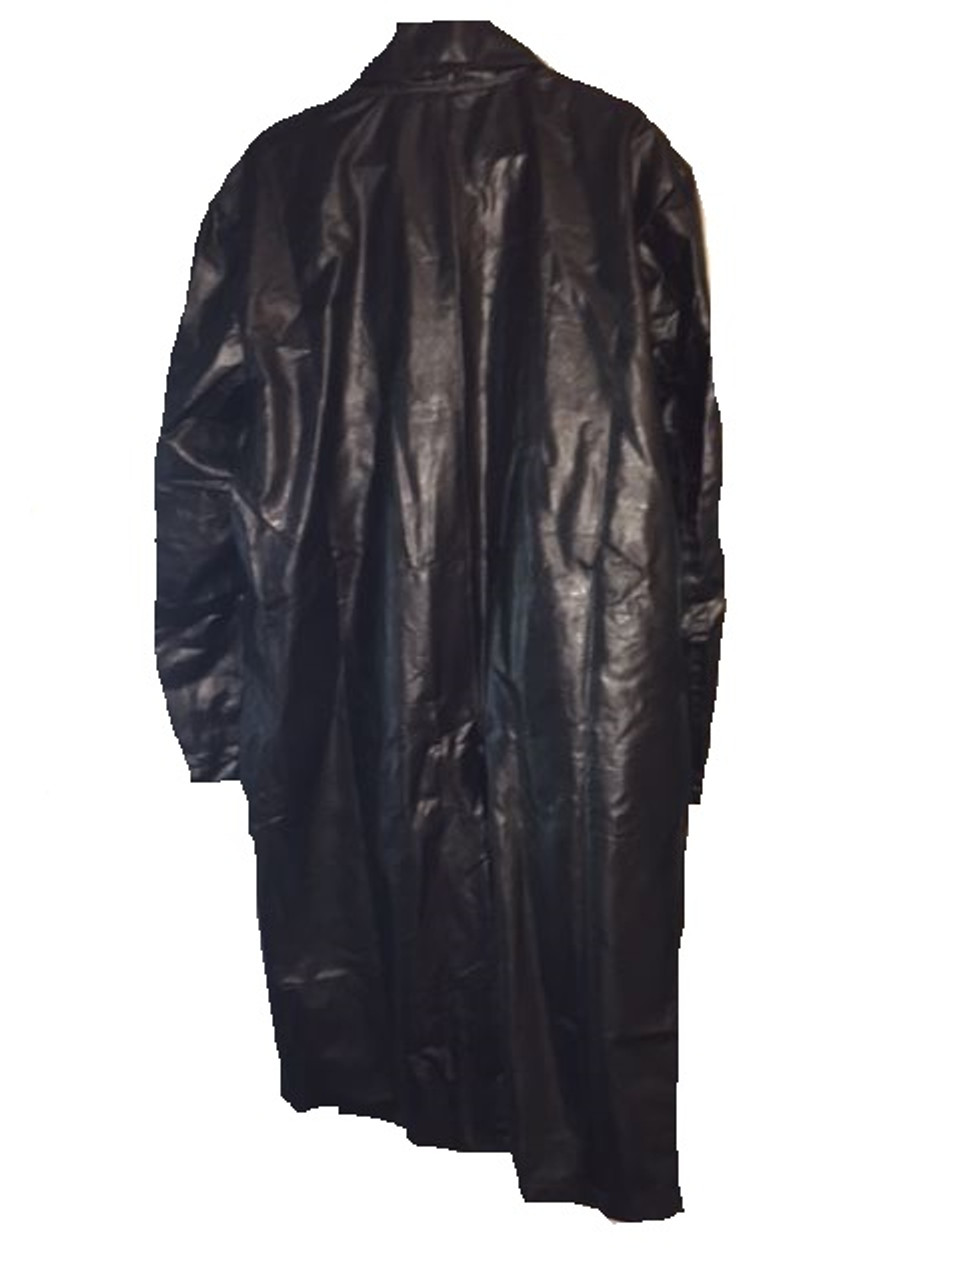 Rubberized Raincoat or Talma - South Union Mills